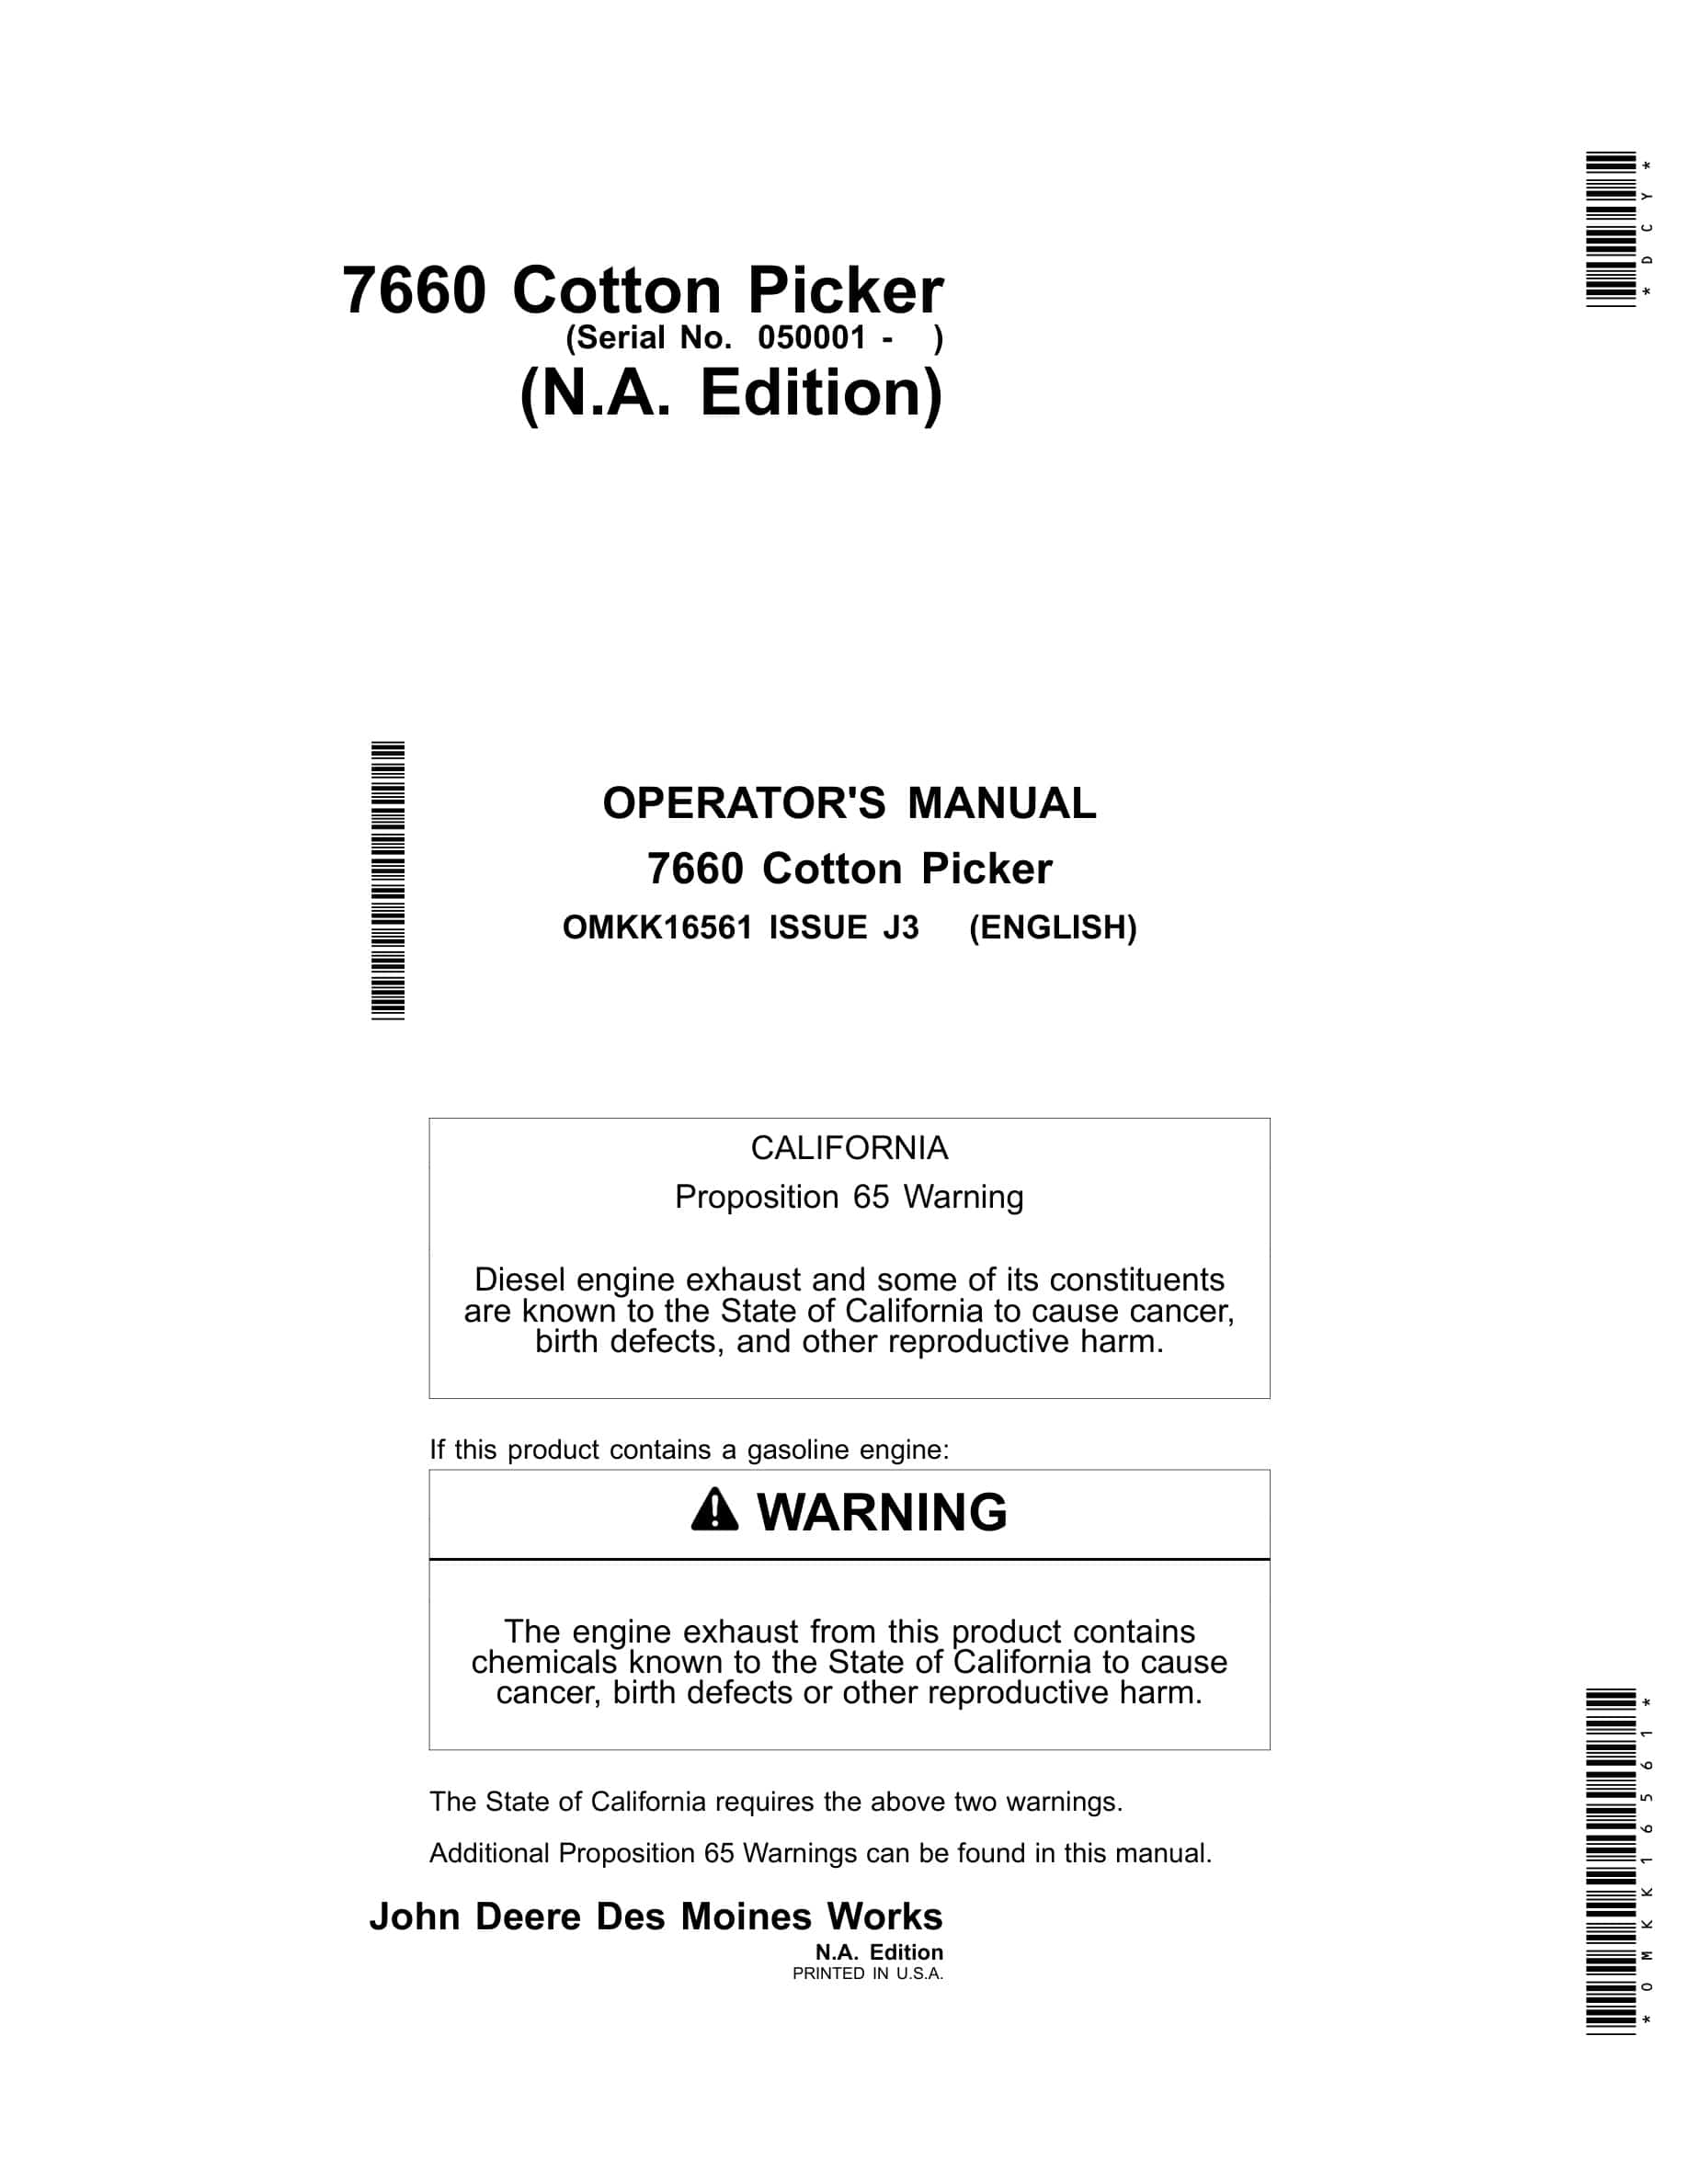 John Deere 7660 Cotton Picker Operator Manual OMKK16561-1